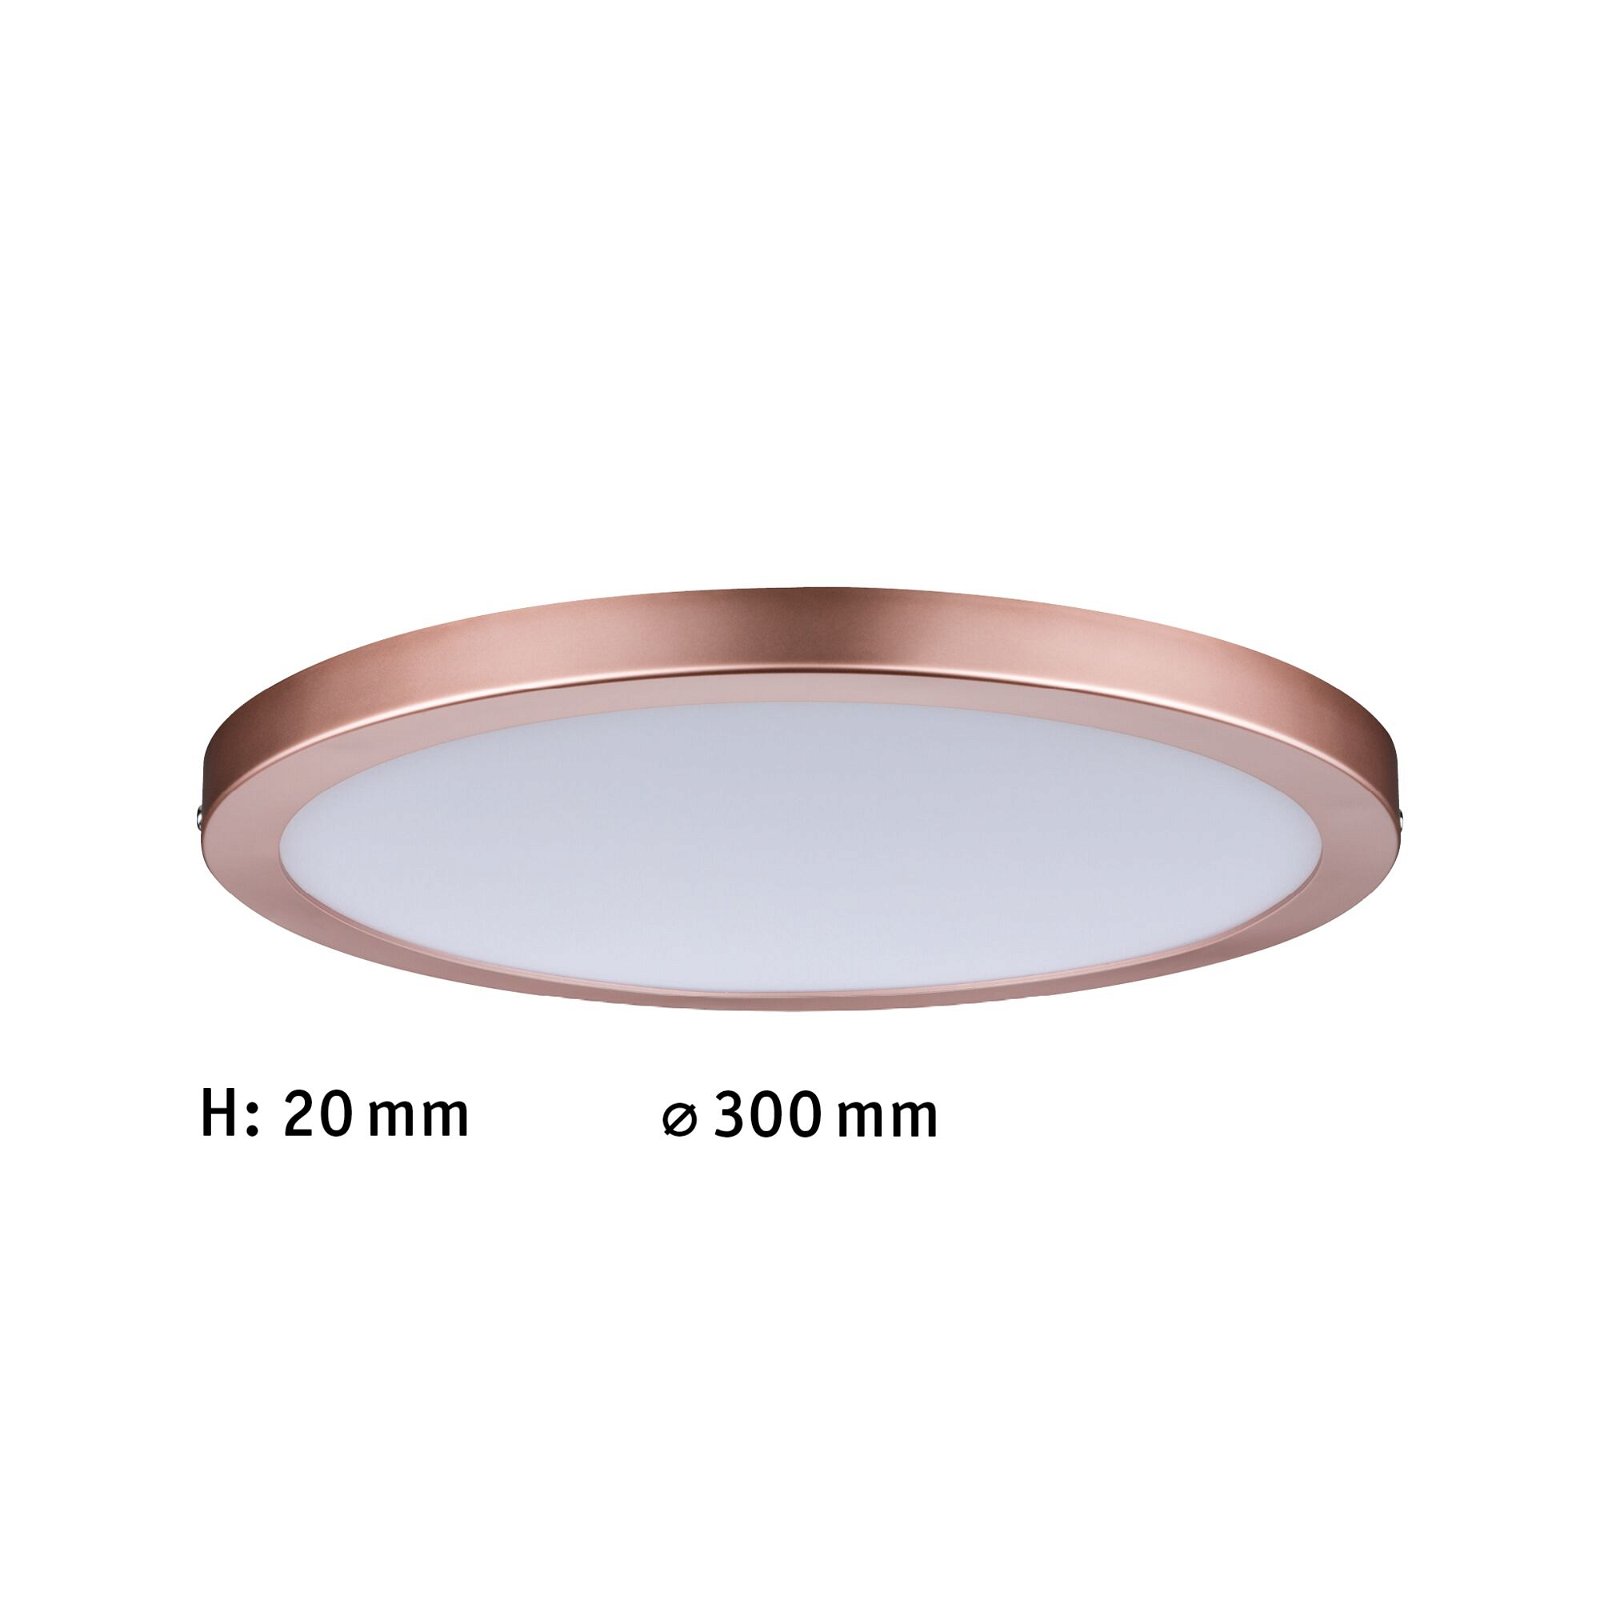 LED-paneel Atria rond 300mm 16W 1450lm 4000K Rosé goud